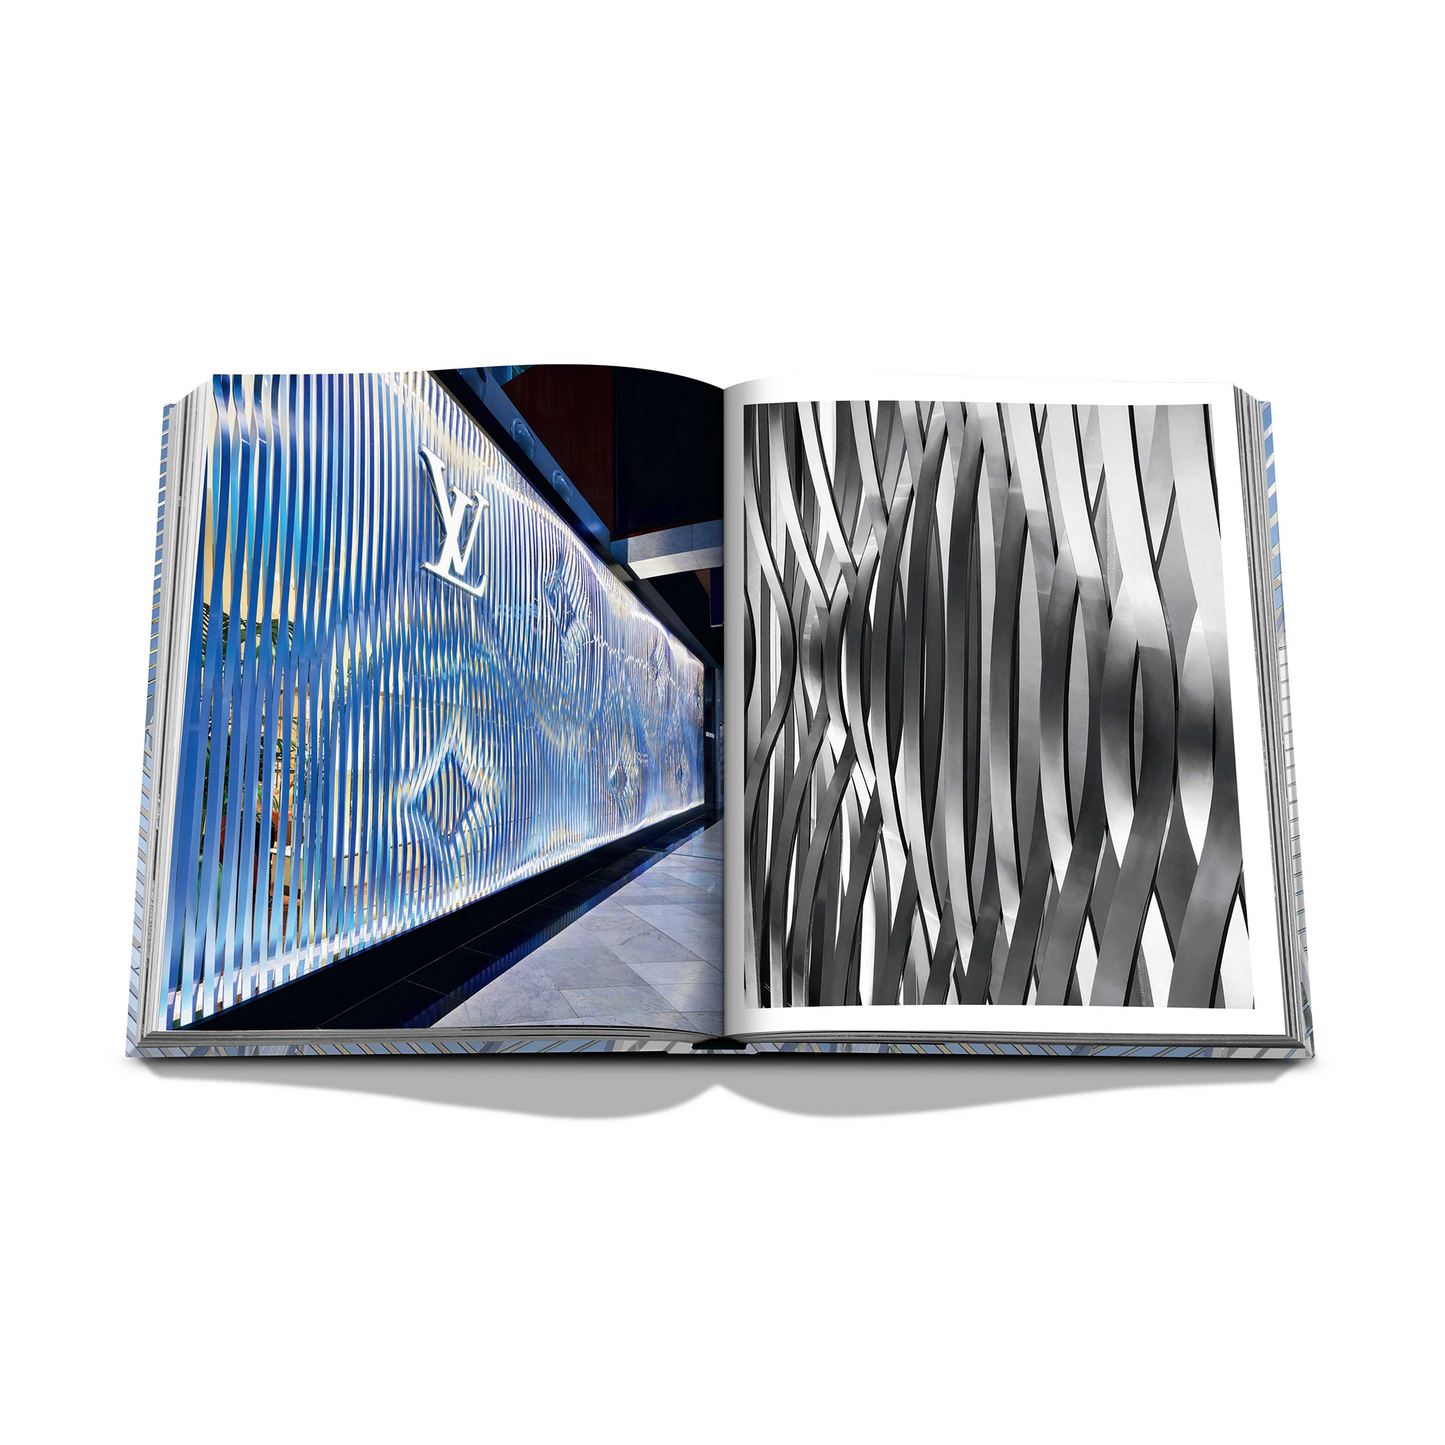 Louis Vuitton Skin: Architecture of Luxury (Tokyo Edition)